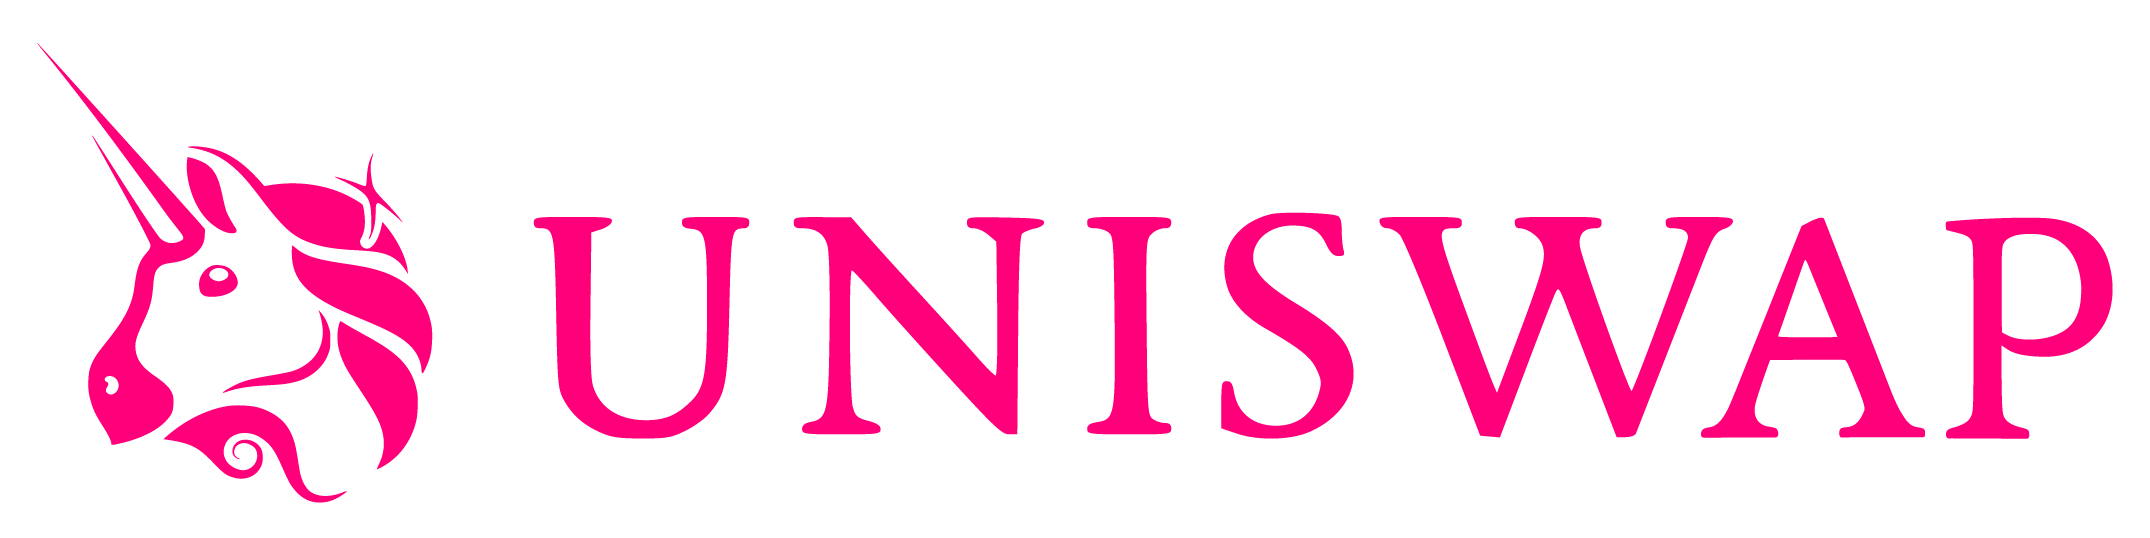 Uniswap logo colors